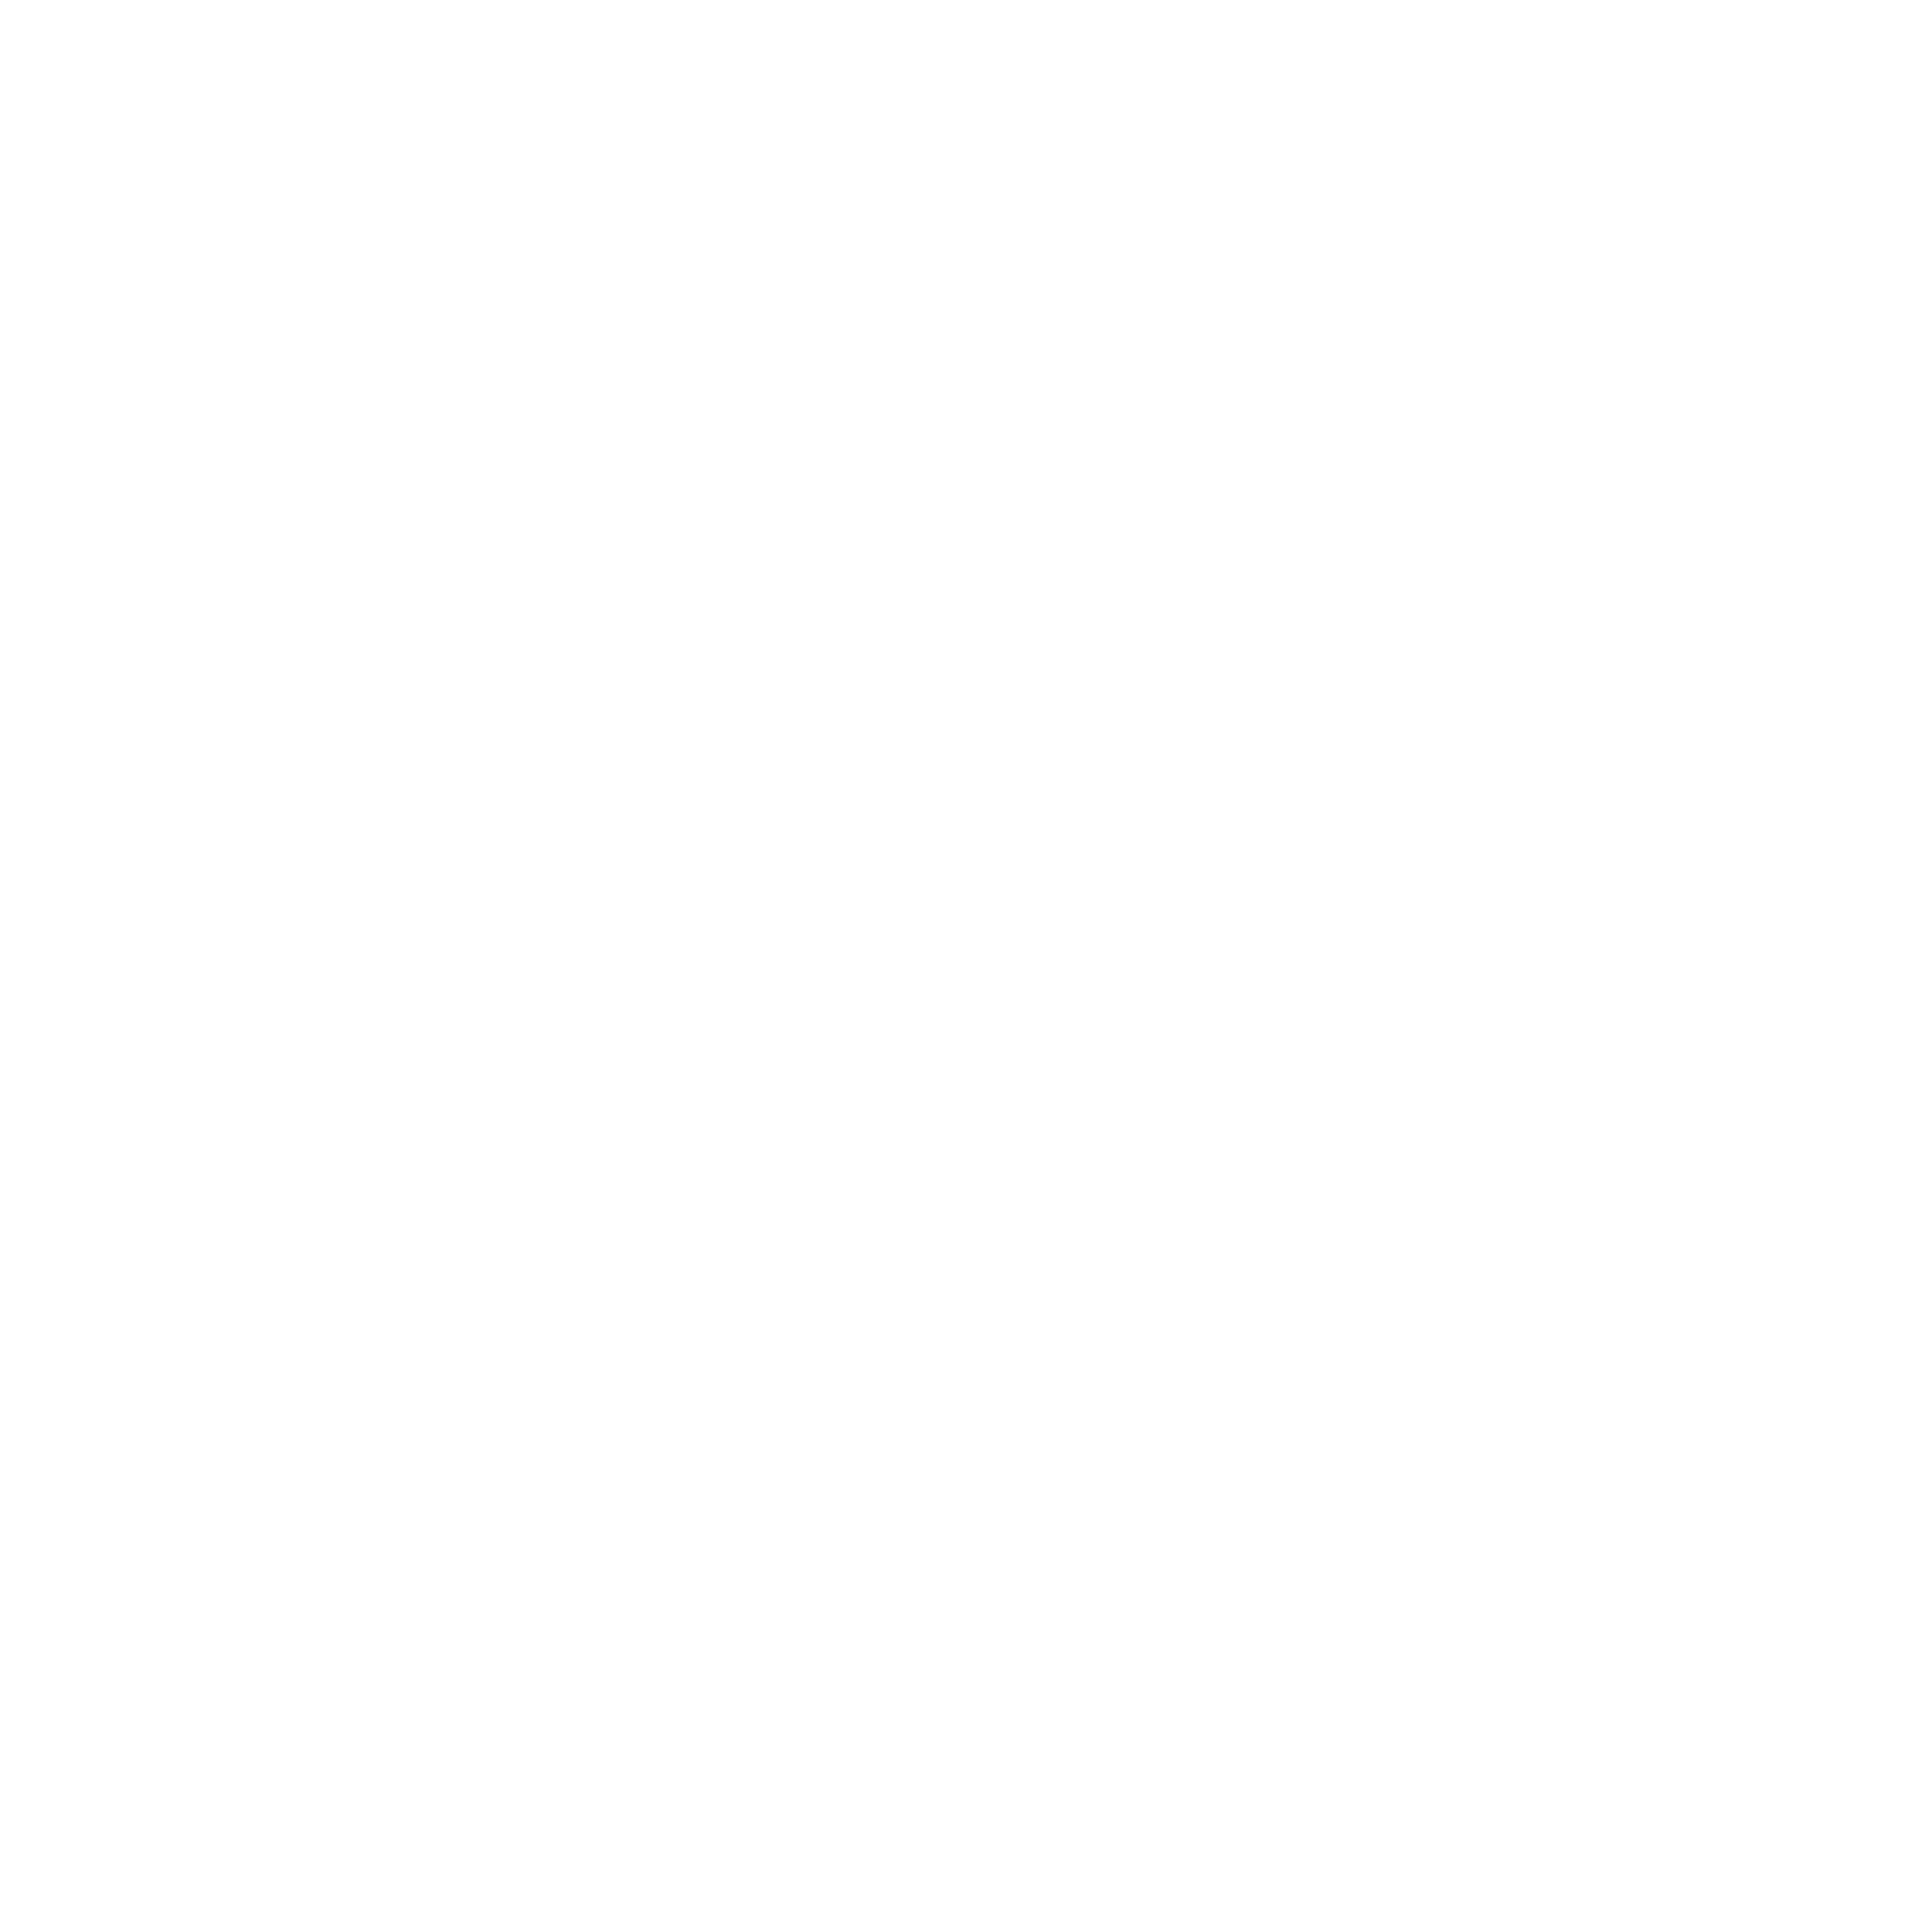 Thrifty Car Rental Logo - Thrifty Car Rental Logo PNG Transparent & SVG Vector - Freebie Supply